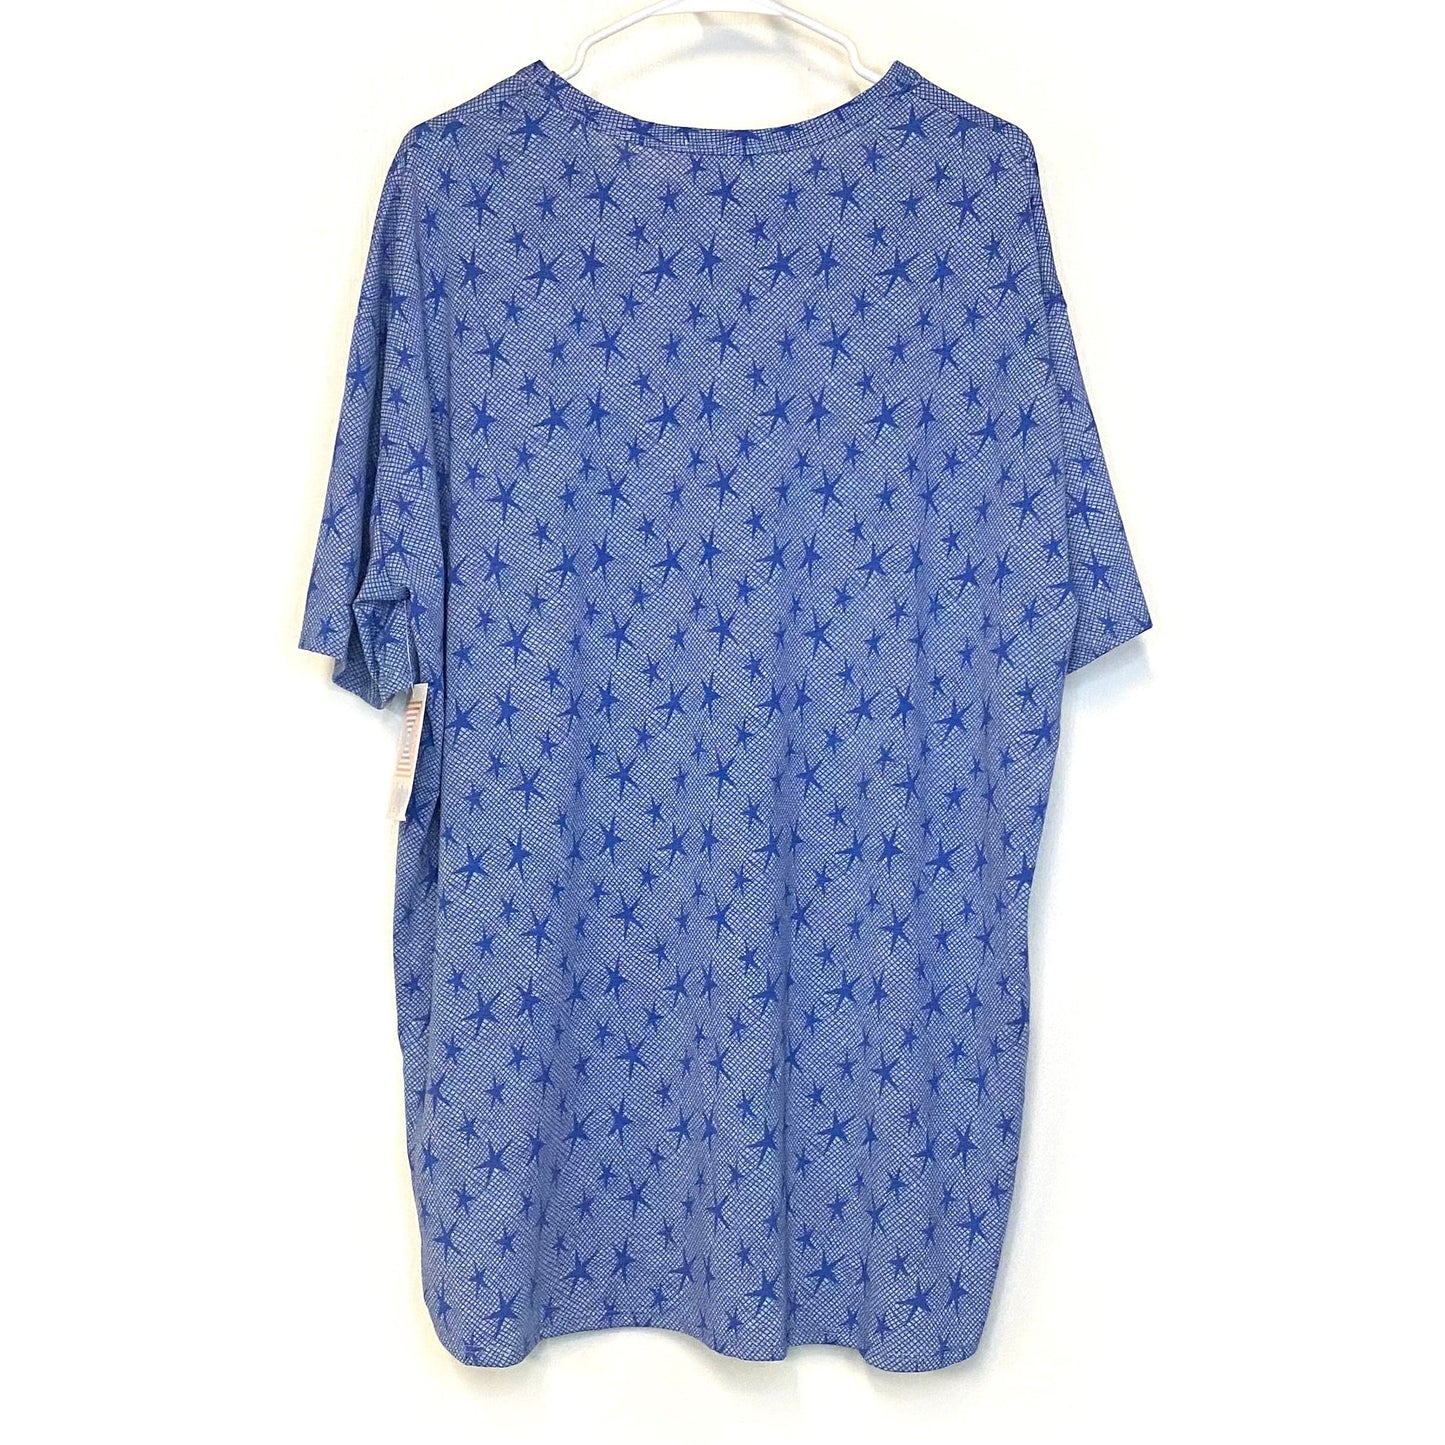 LuLaRoe Womens Size 3XL Gray/Blue Stars Patrick T Graphic T-Shirt Shirt S/s NWT